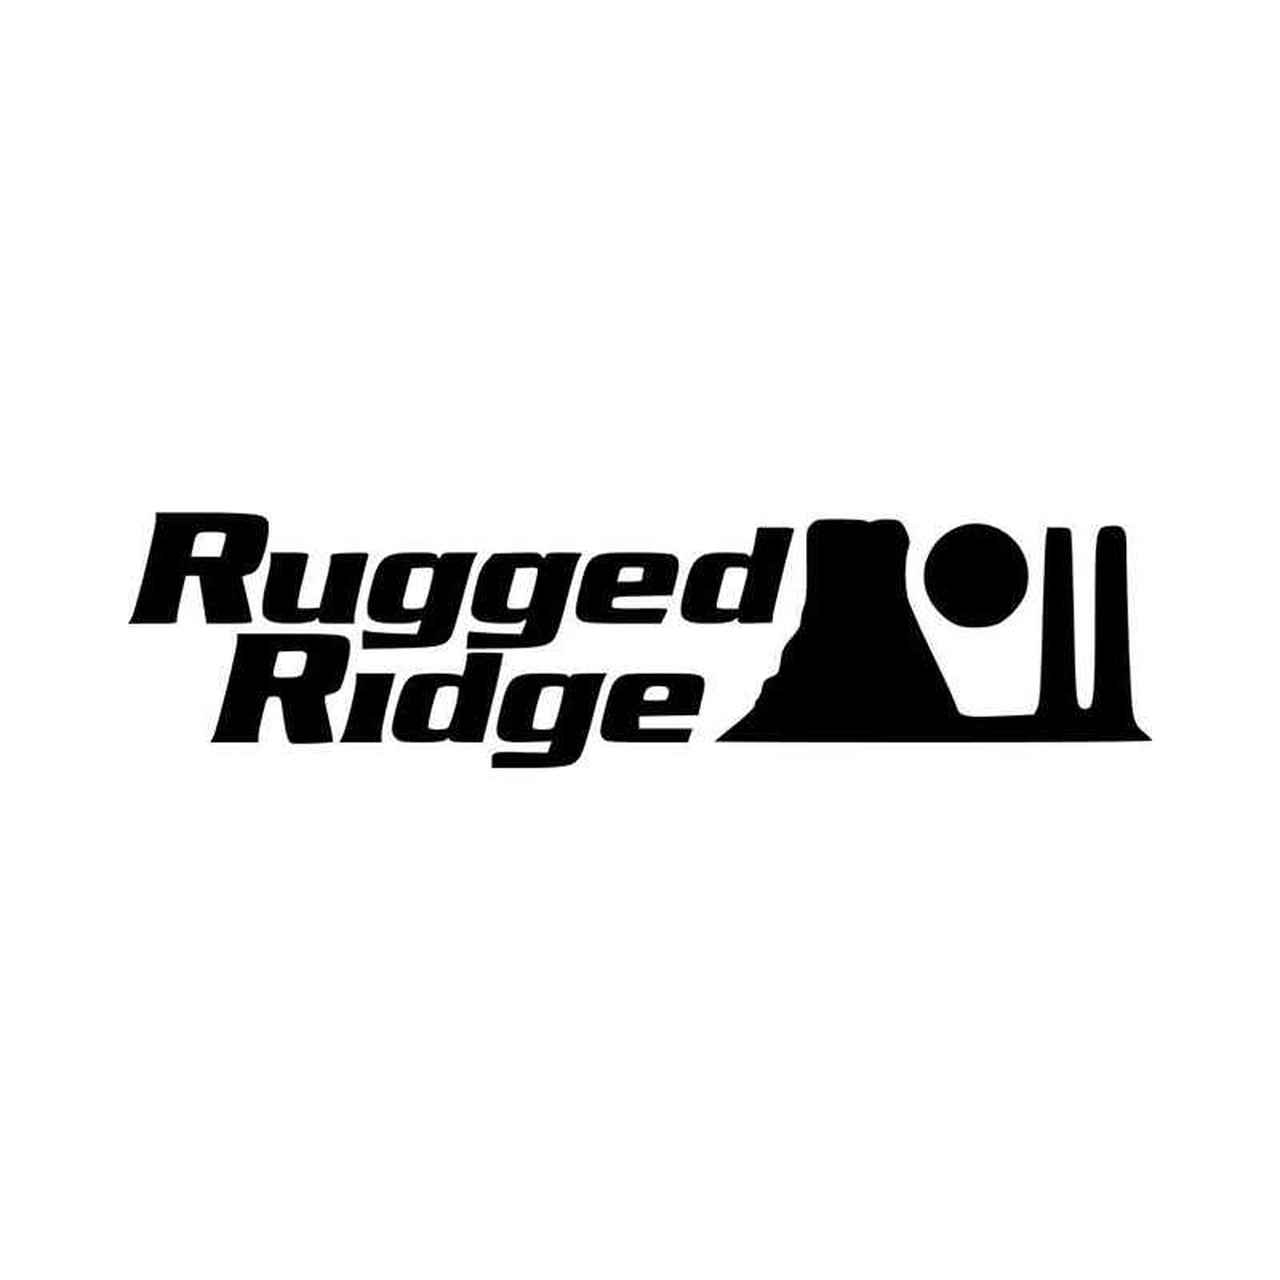 Ridge Logo - Rugged Ridge Sponsor Logo Vinyl Decal Sticker